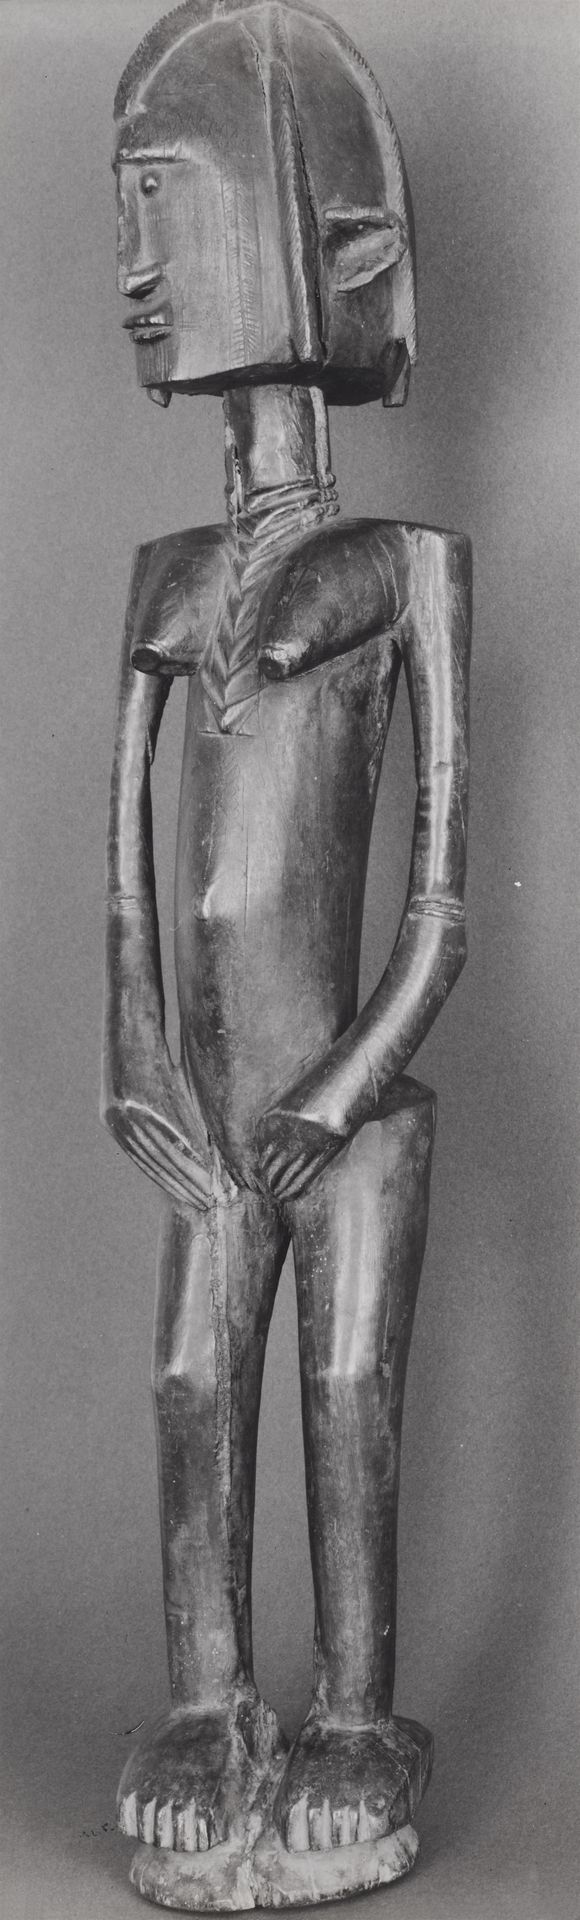 Walker Evans 沃克-埃文斯



祖先图, 非洲, 马里, 多贡人

1935



复古，明胶银印刷品。23.9 x 7.4厘米。背面有摄影师的印&hellip;